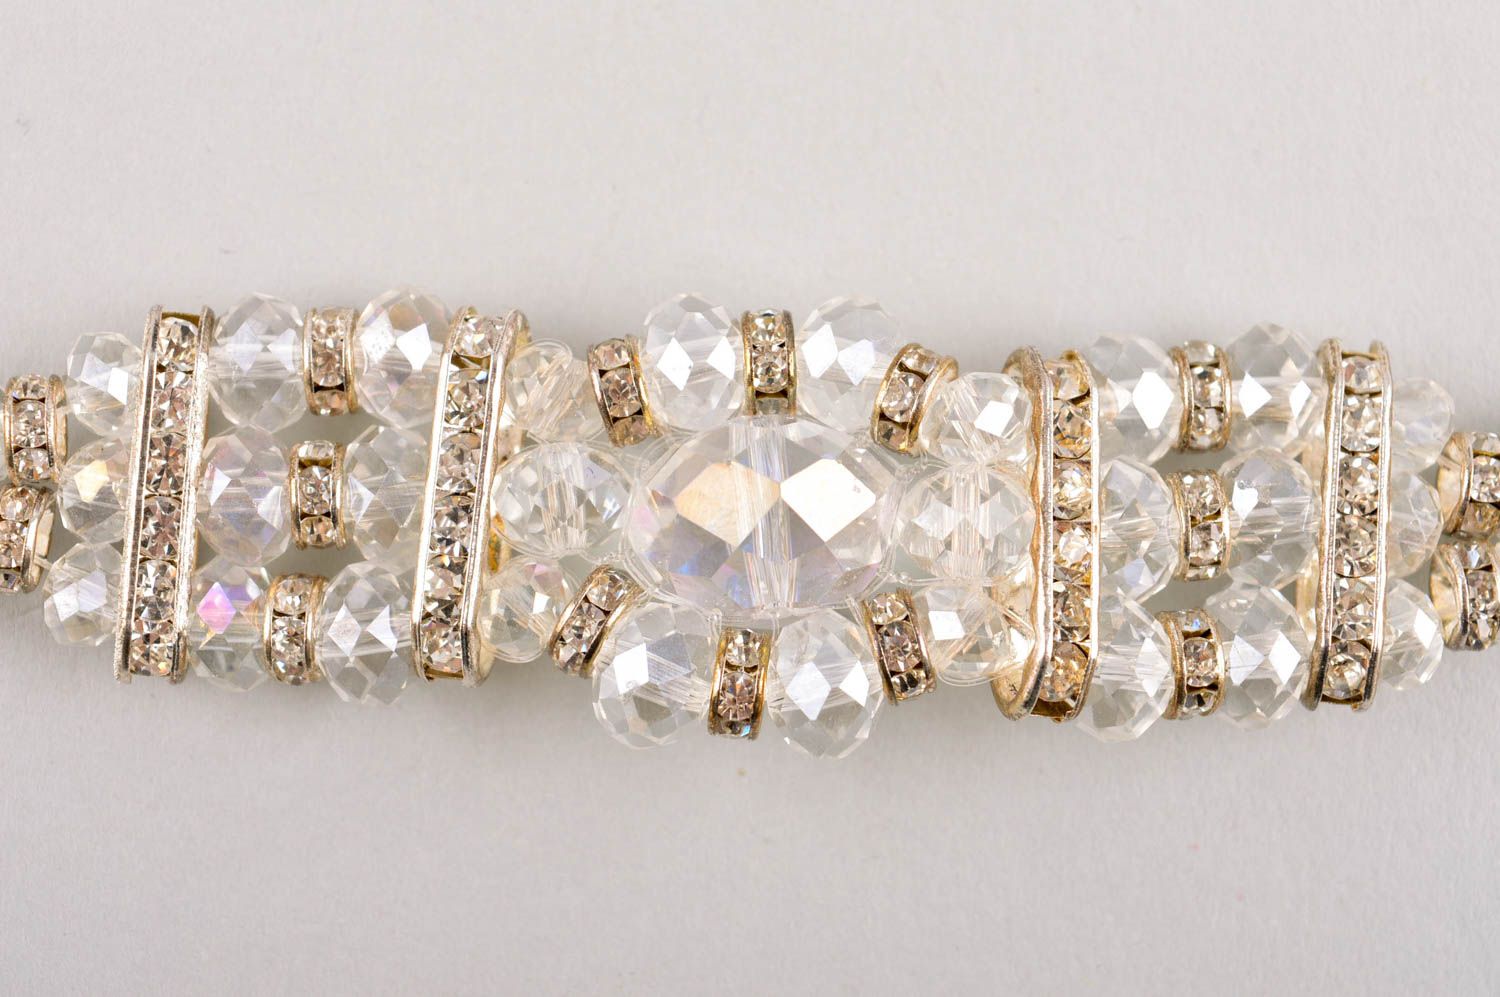 Handmade crystal beads designer collar unique bijouterie accessories for her photo 3